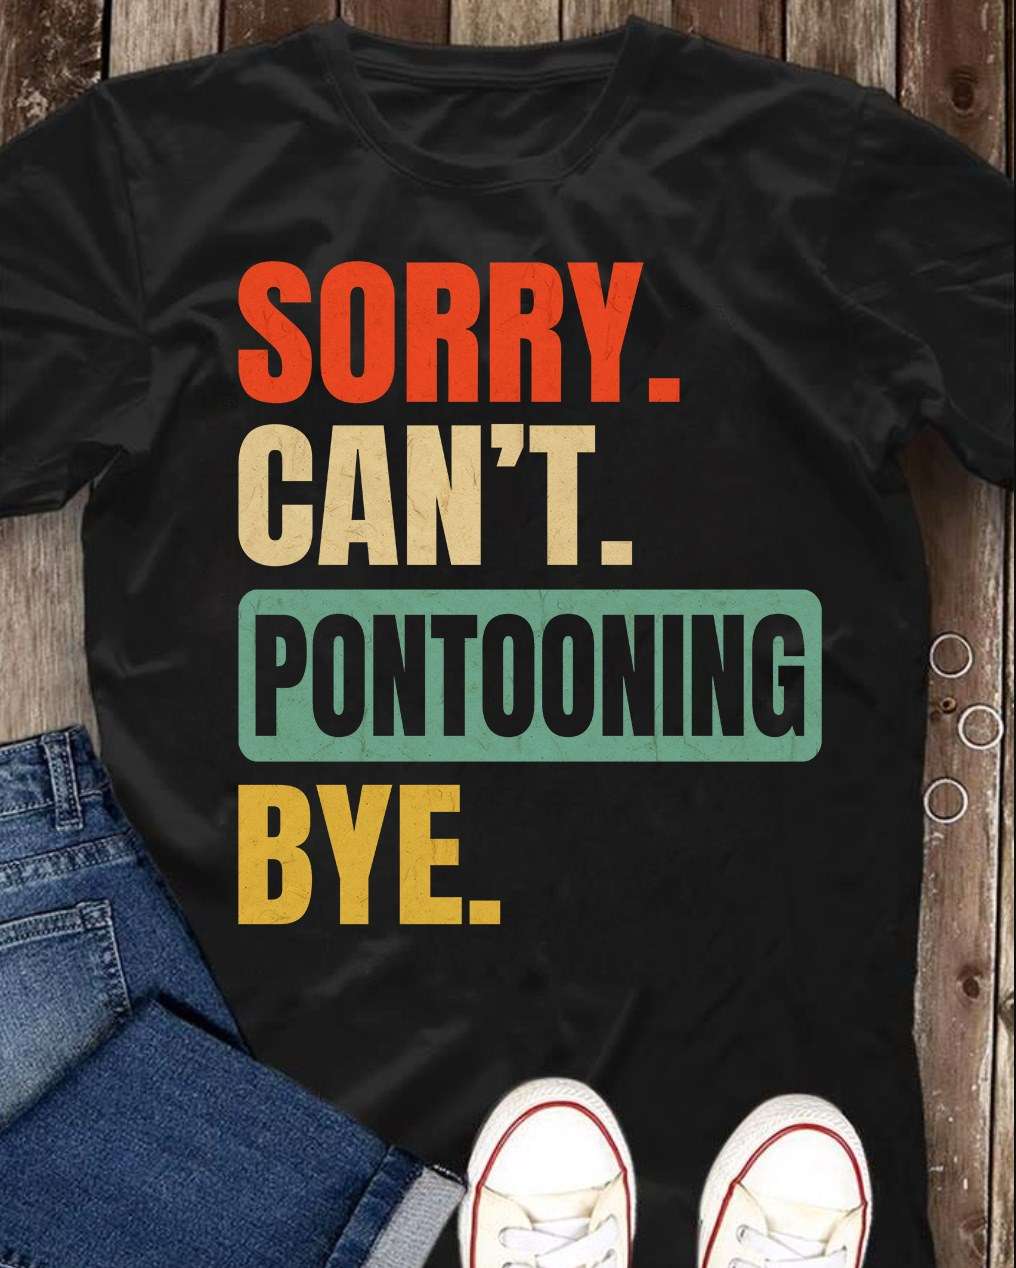 Sorry can't pontooning bye - Gift for pontooning people, pontooning the hobby